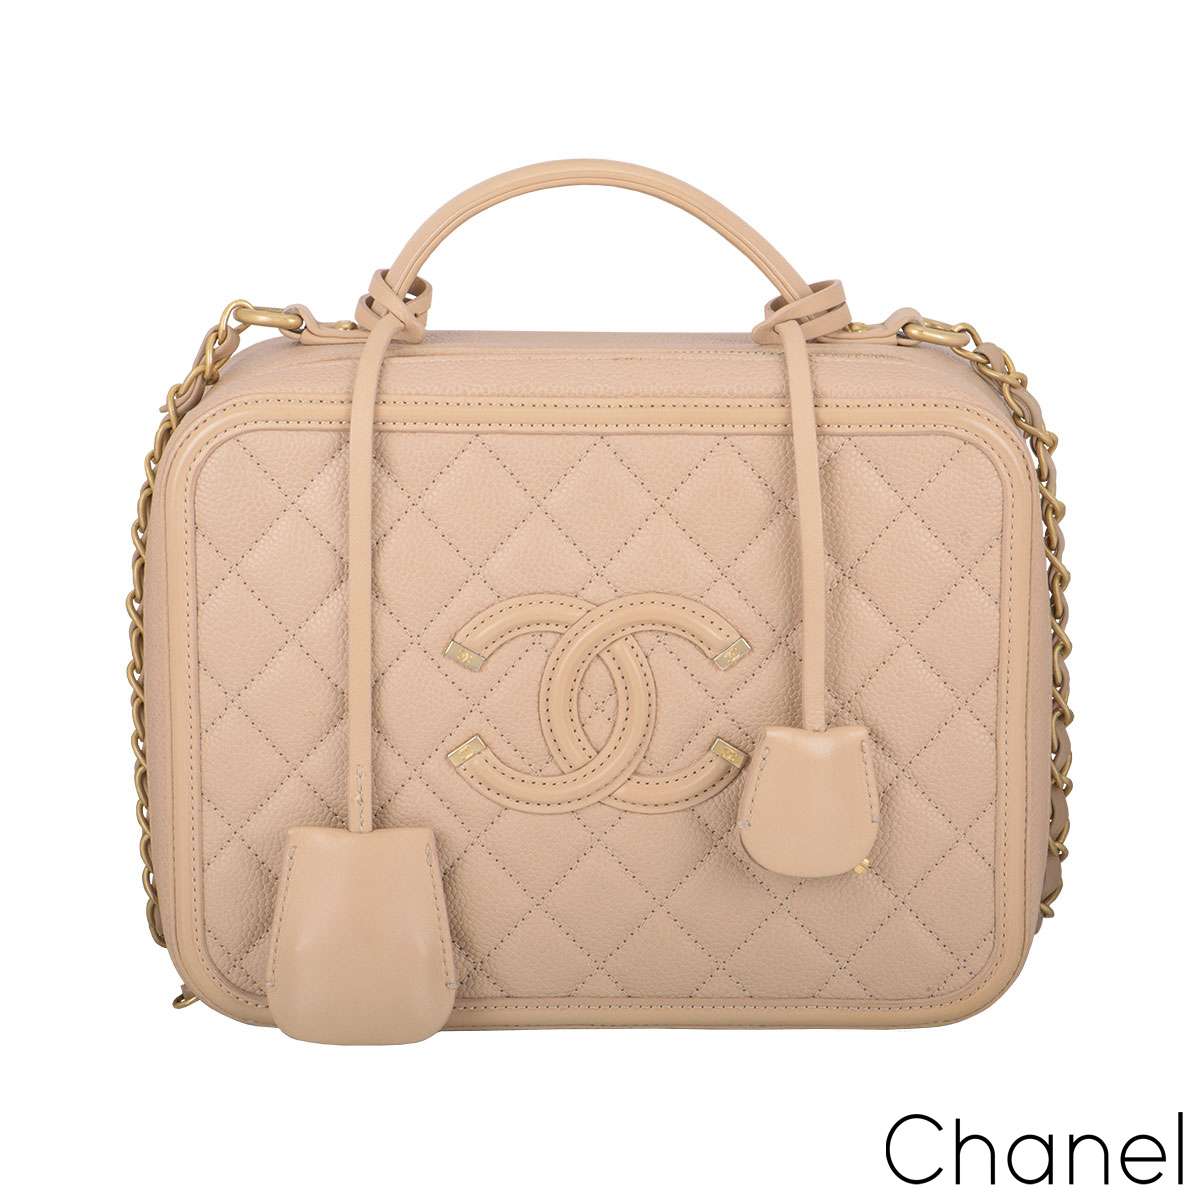 Chanel Large Vanity case Handbag